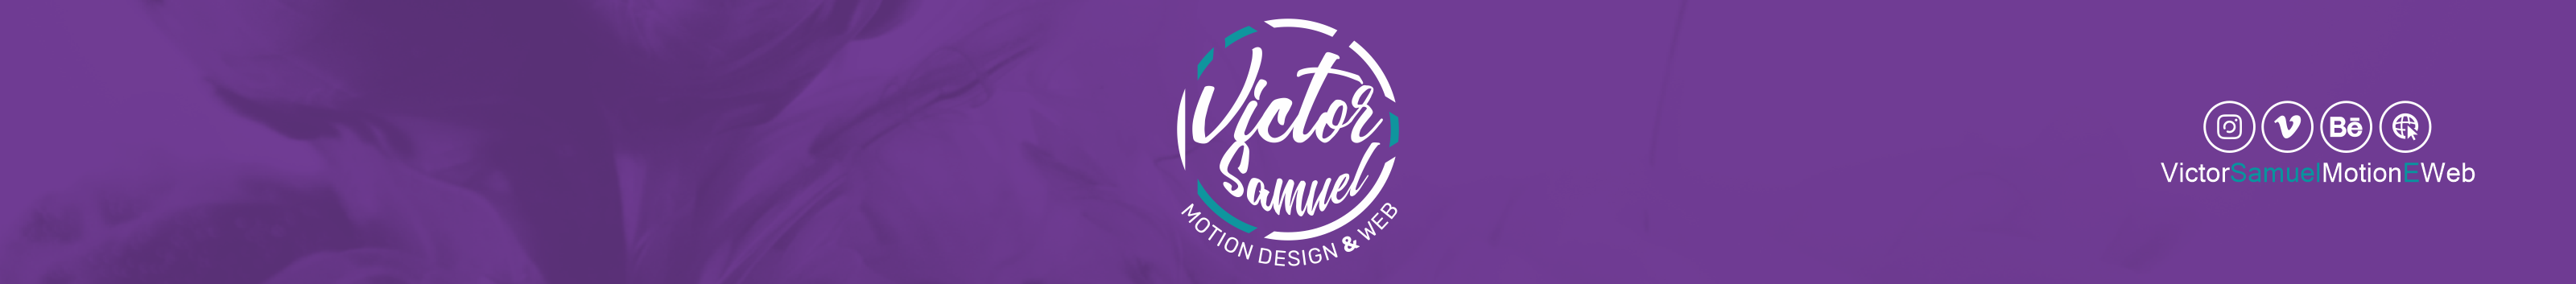 Bannière de profil de Victor Samuel Silva